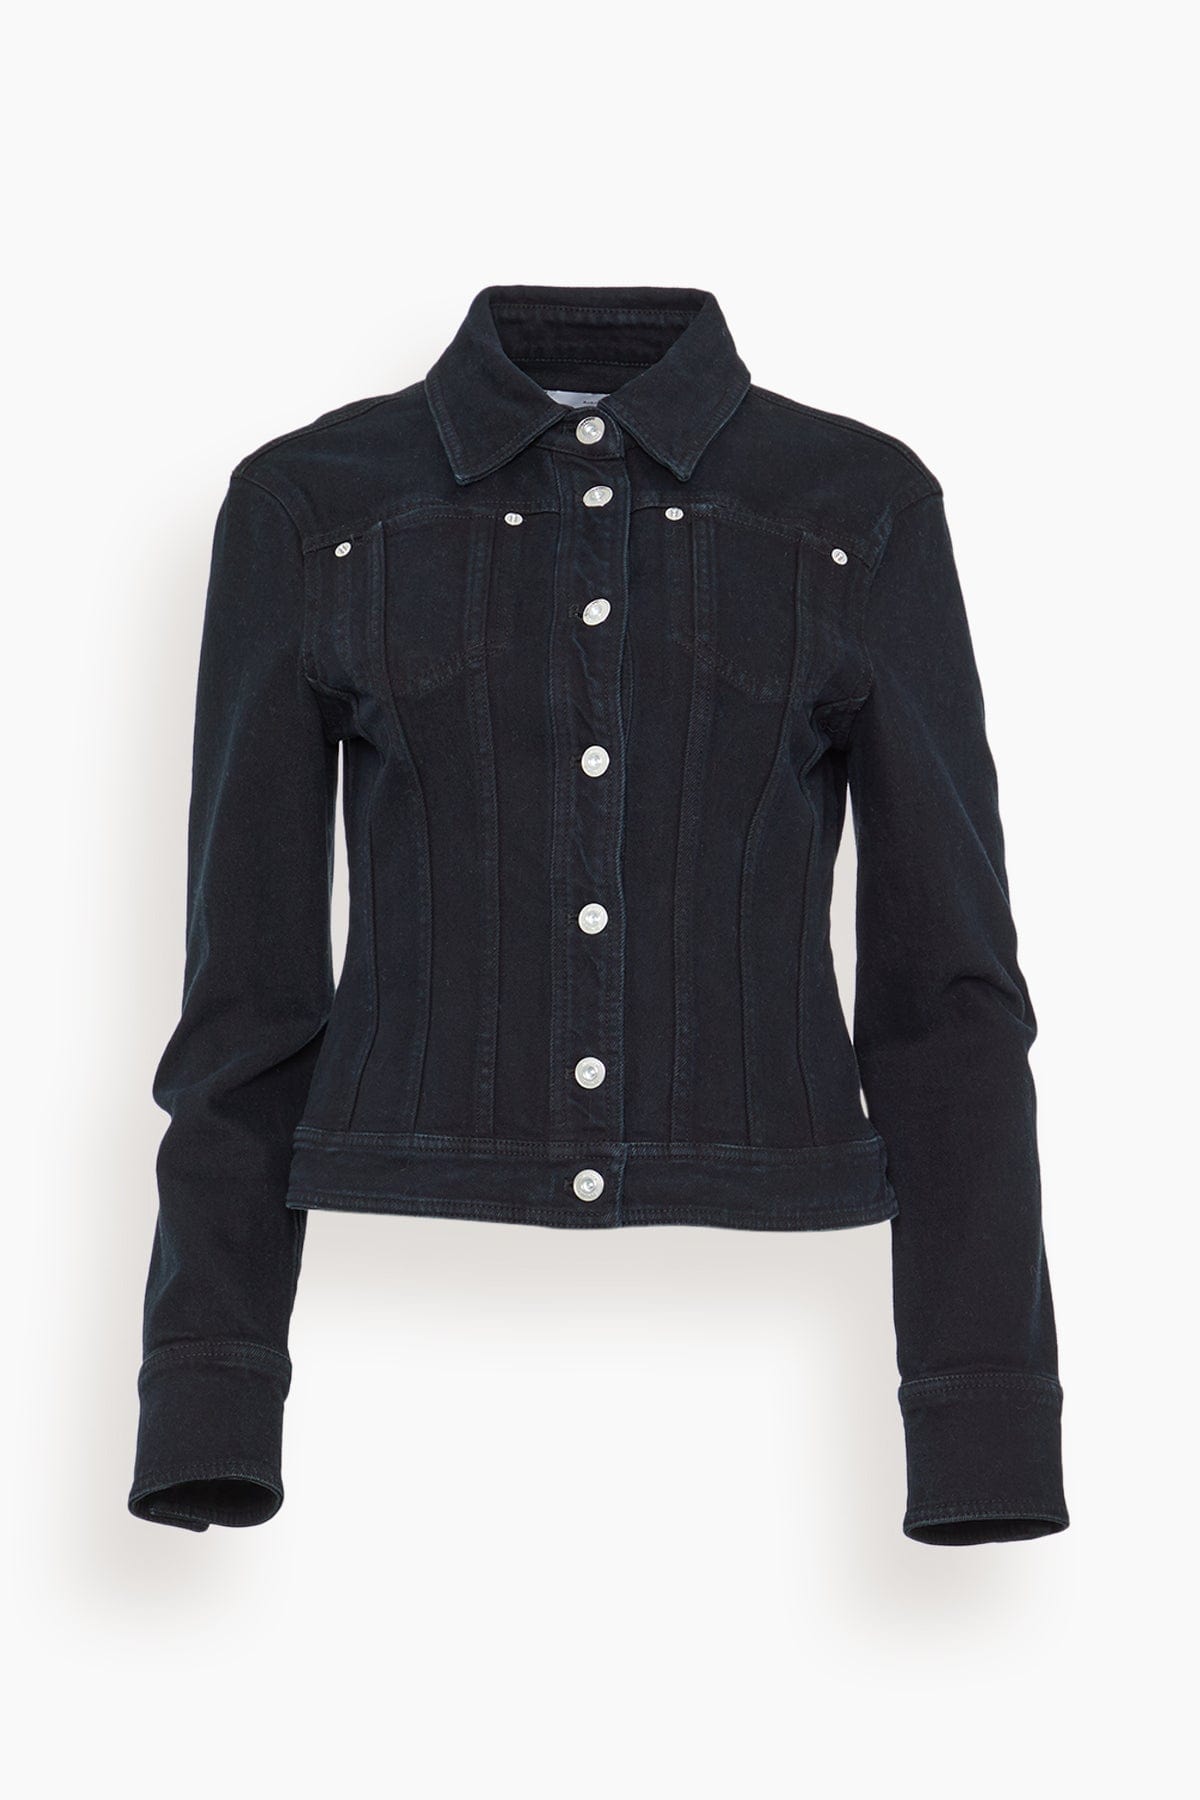 Proenza Schouler White Label Denim Jacket in Black - Black - Size: 10